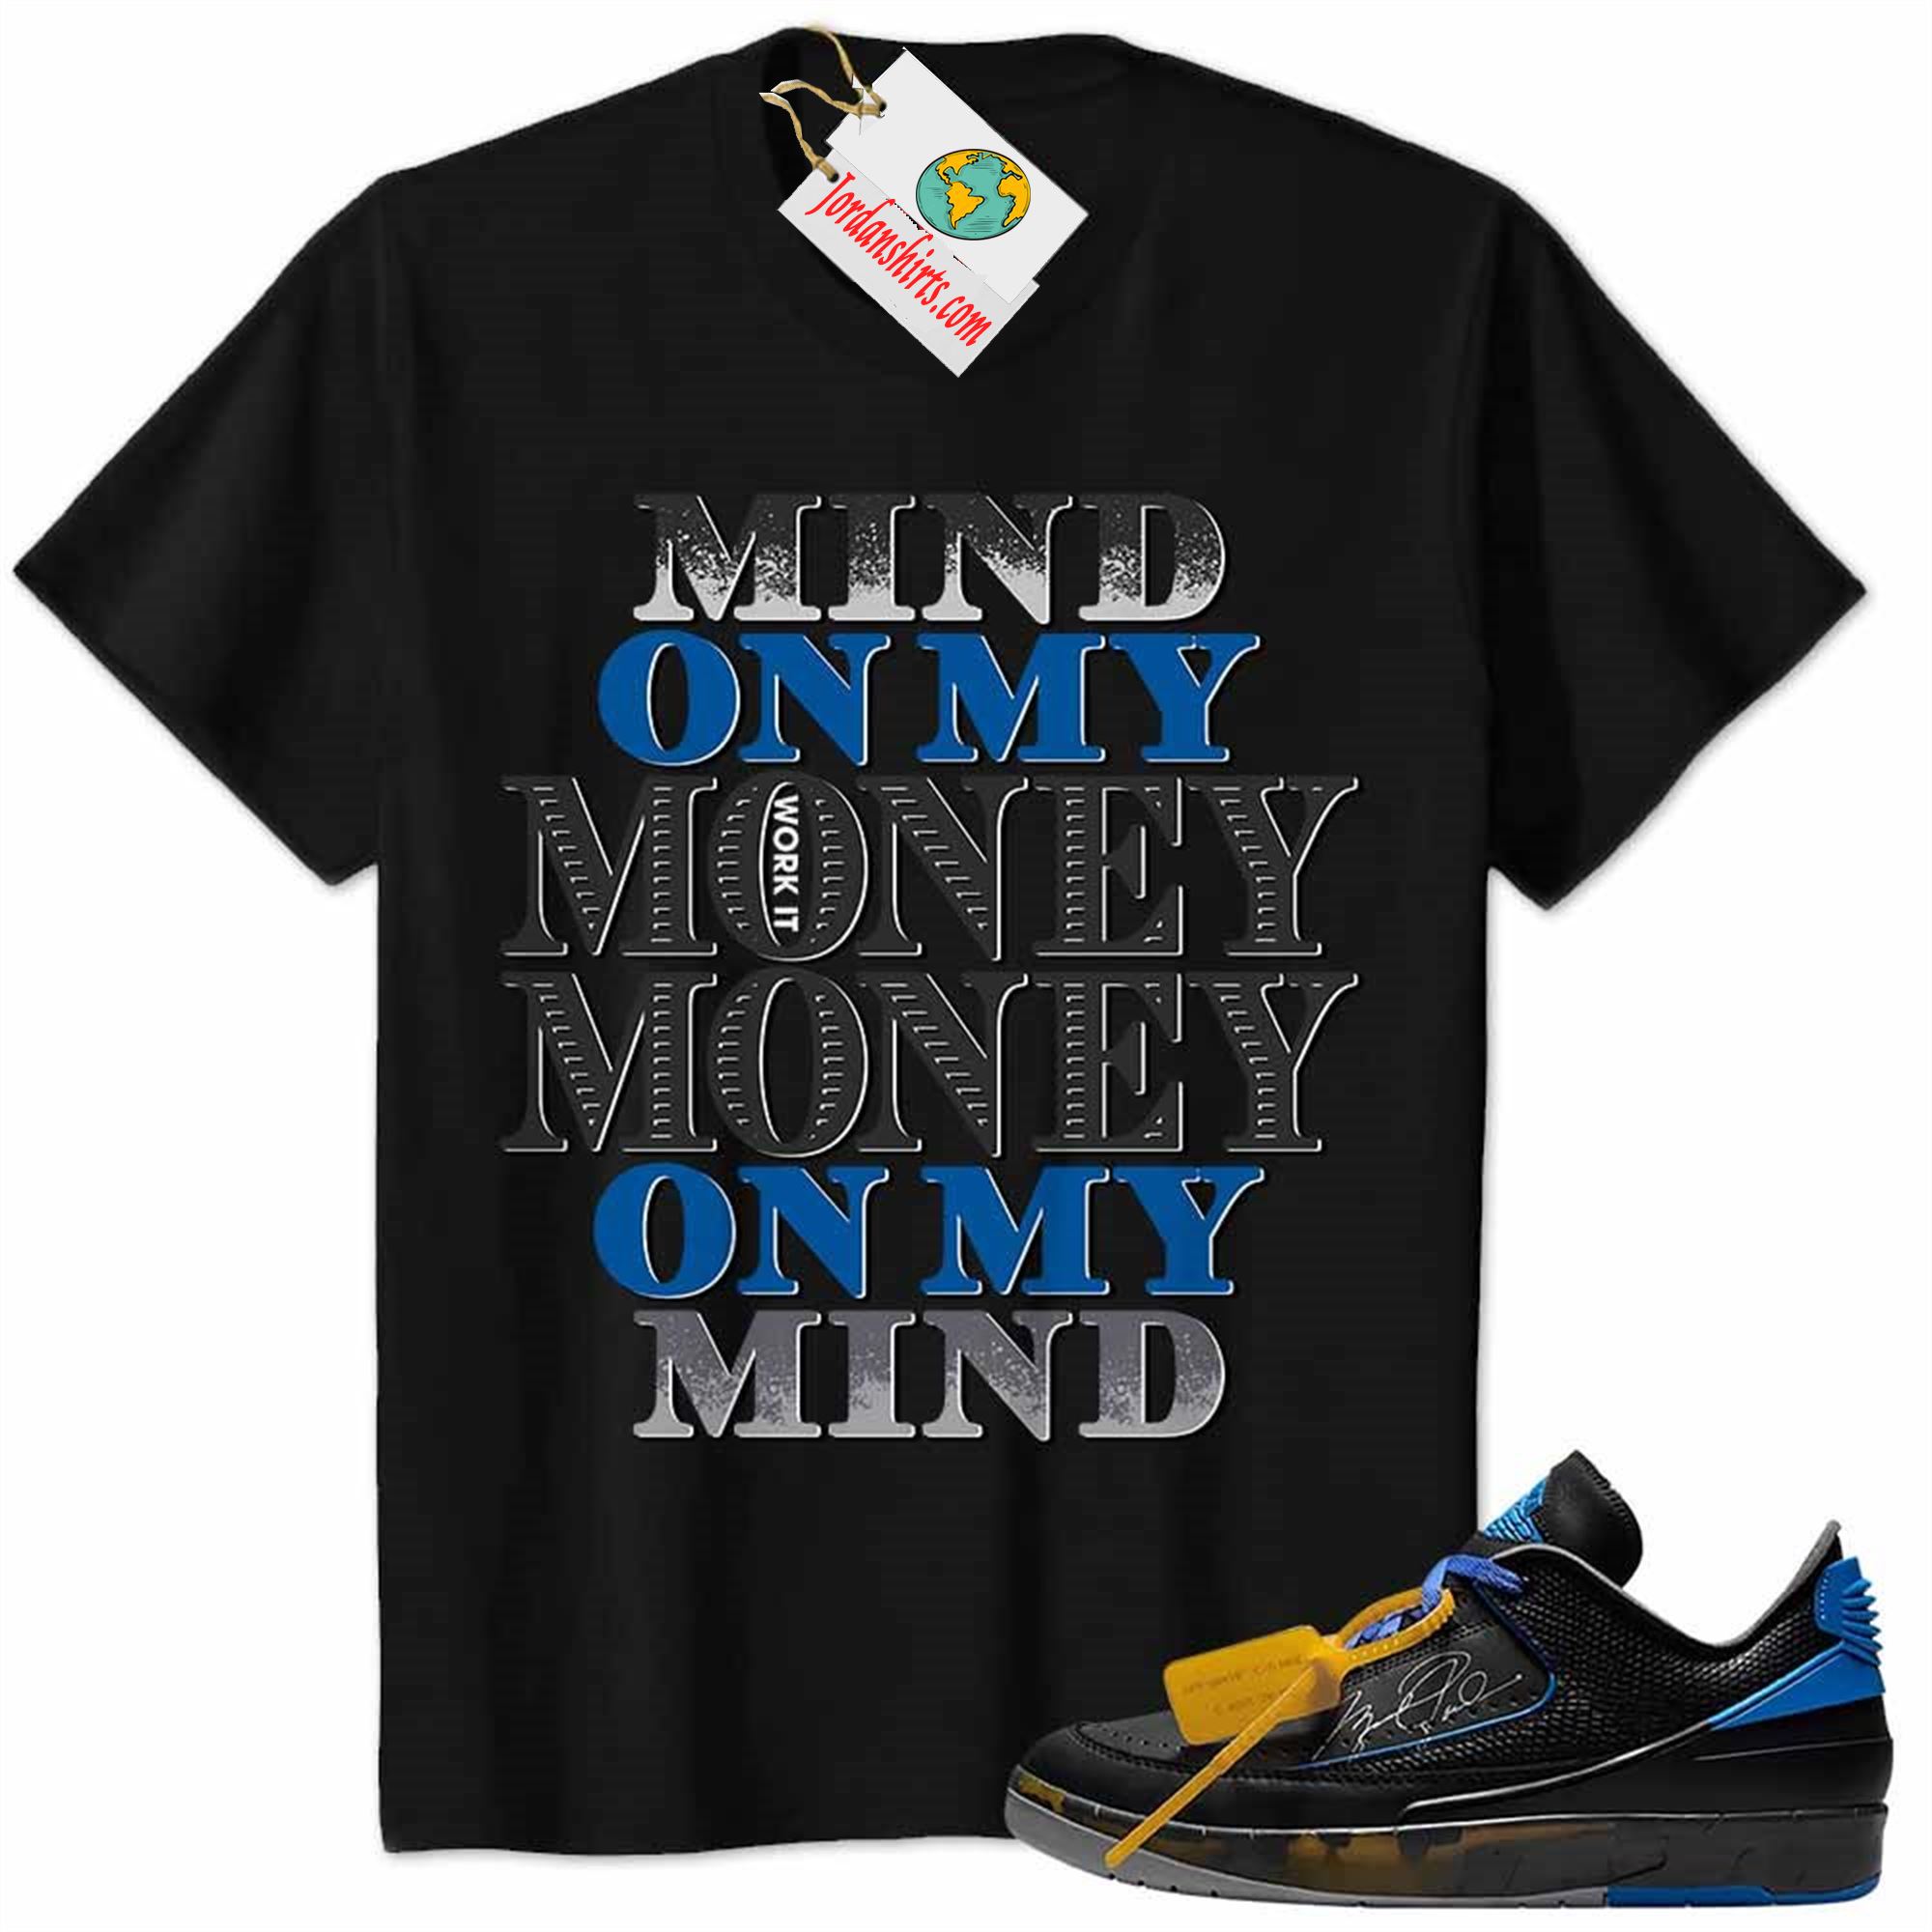 Jordan 2 Shirt, Jordan 2 Low X Off-white Black And Varsity Royal Shirt Mind On My Money Money On My Mind Black Full Size Up To 5xl